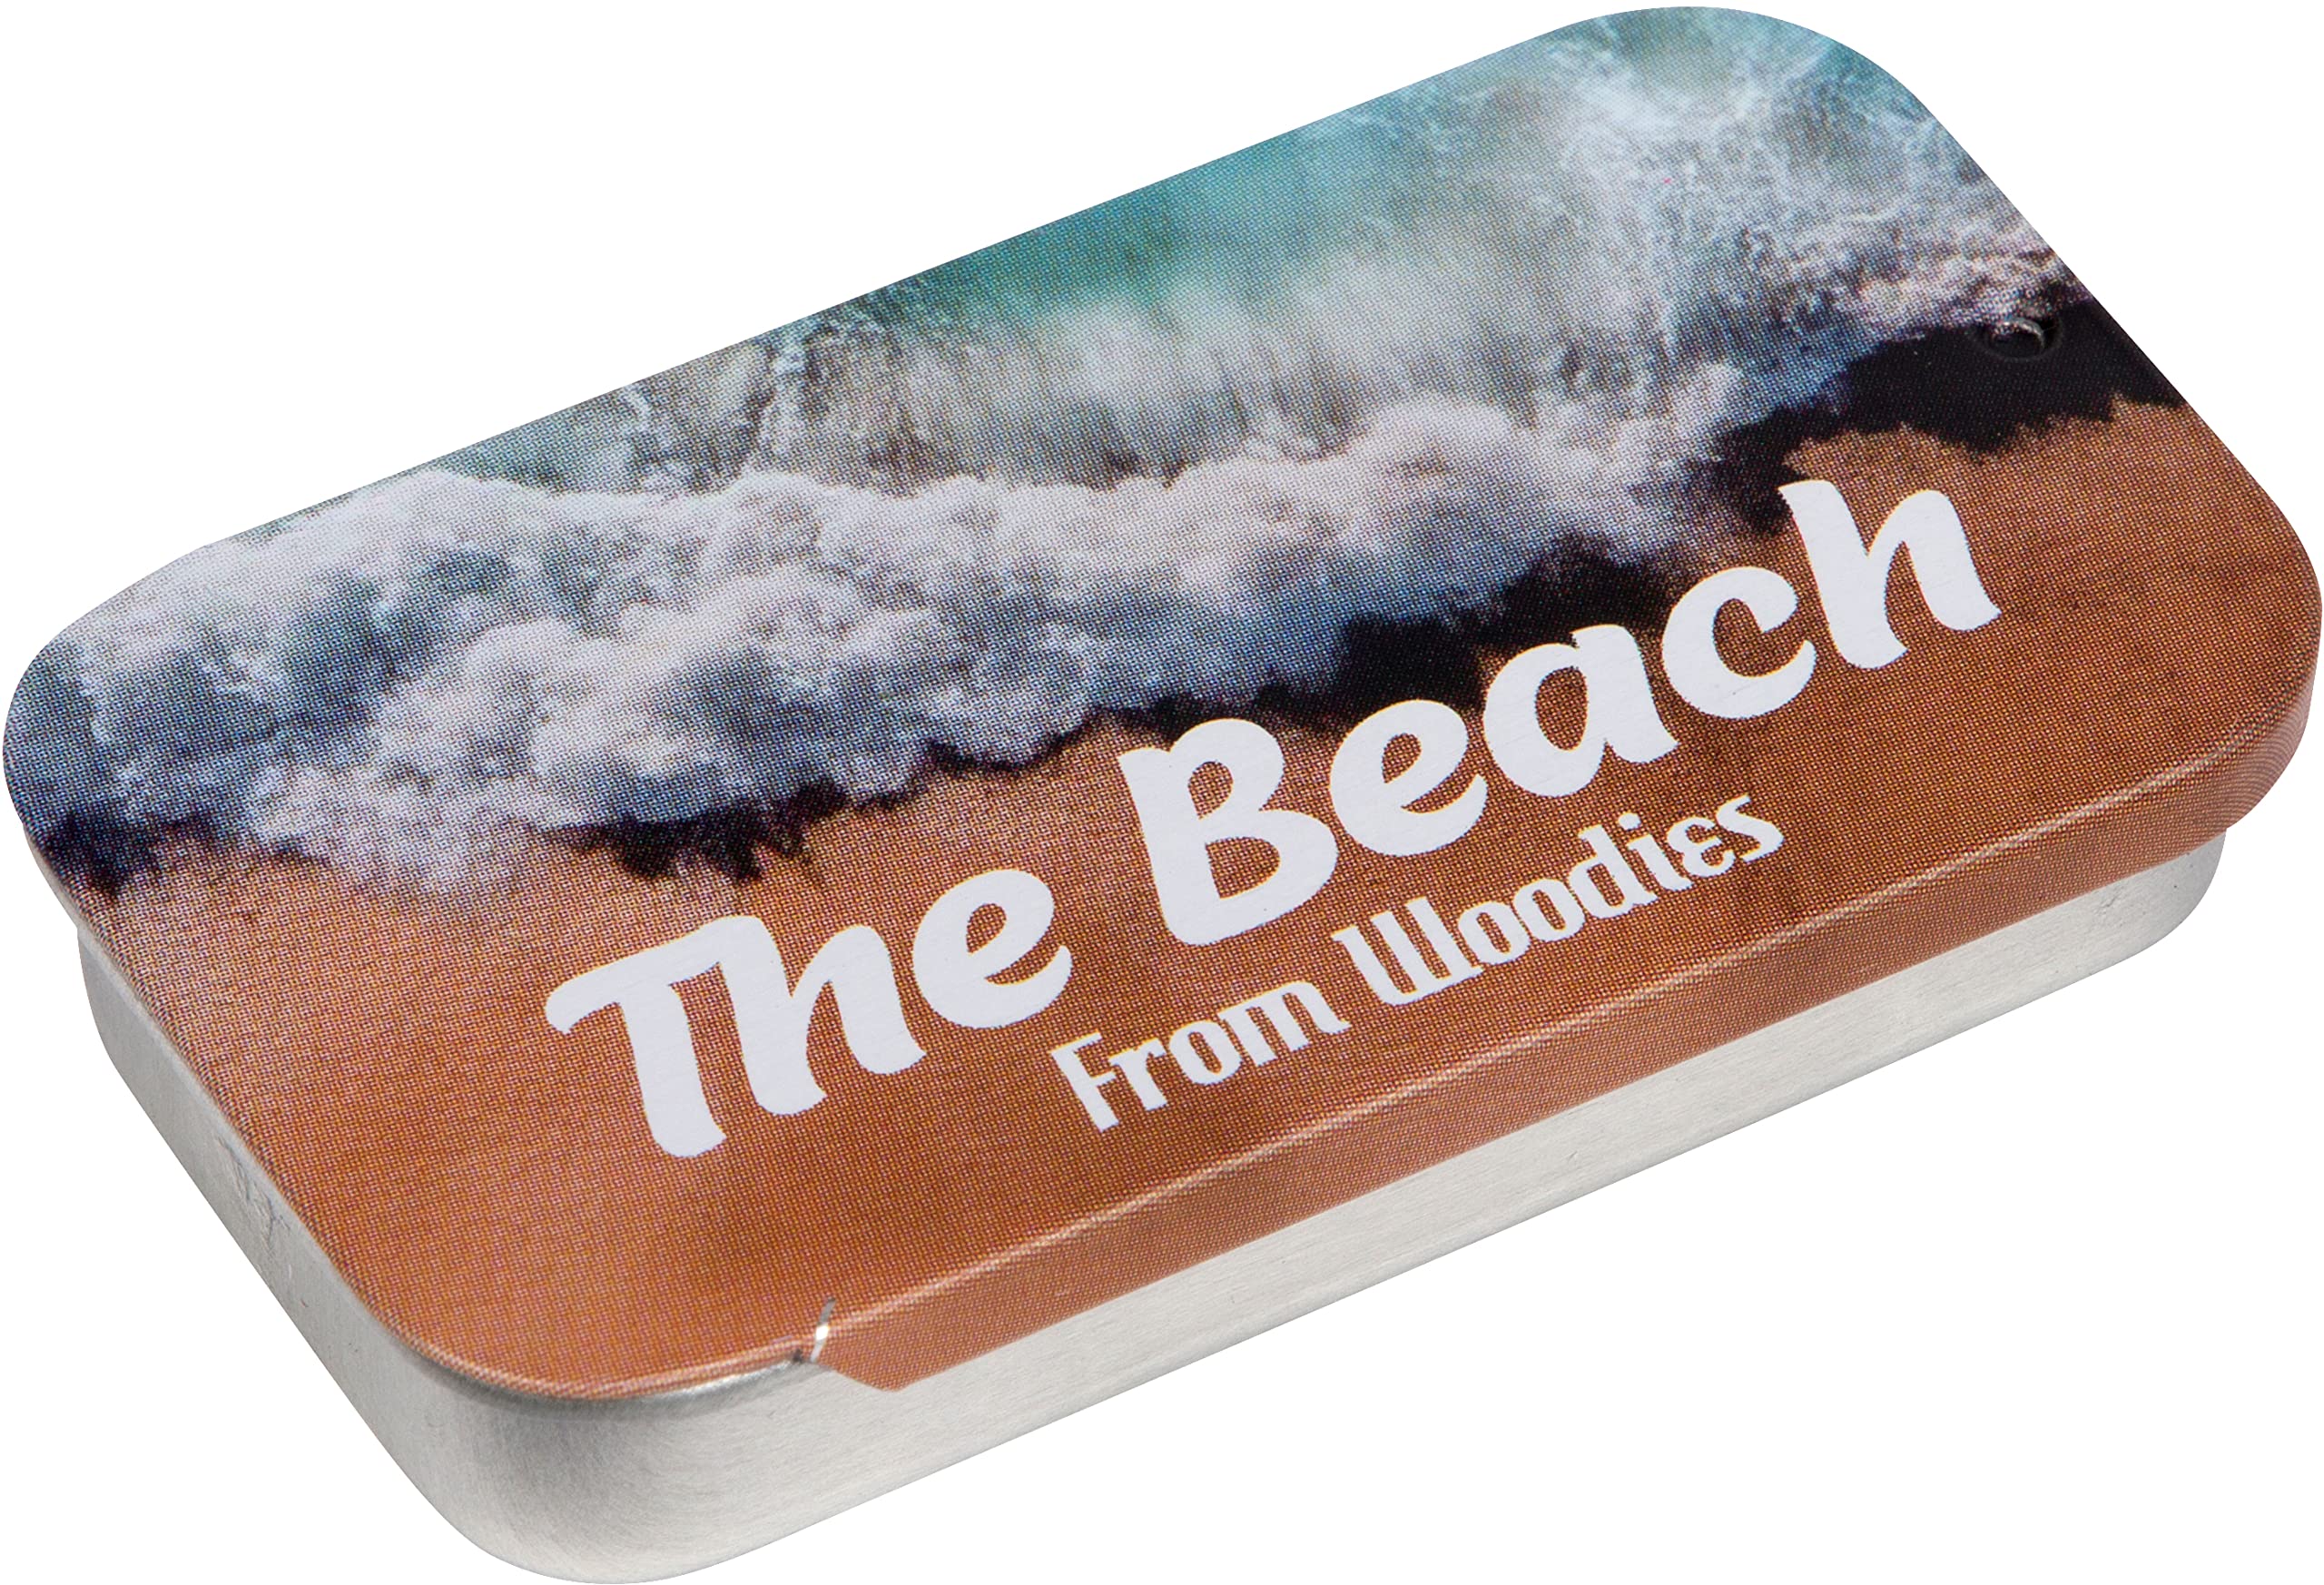 Woodies The Beach Cologne for Men - Blue Aquatic, Sea Salt, Clean Woodsy Musk - Travel-Ready Men's Fragrance, 1.13oz Balm